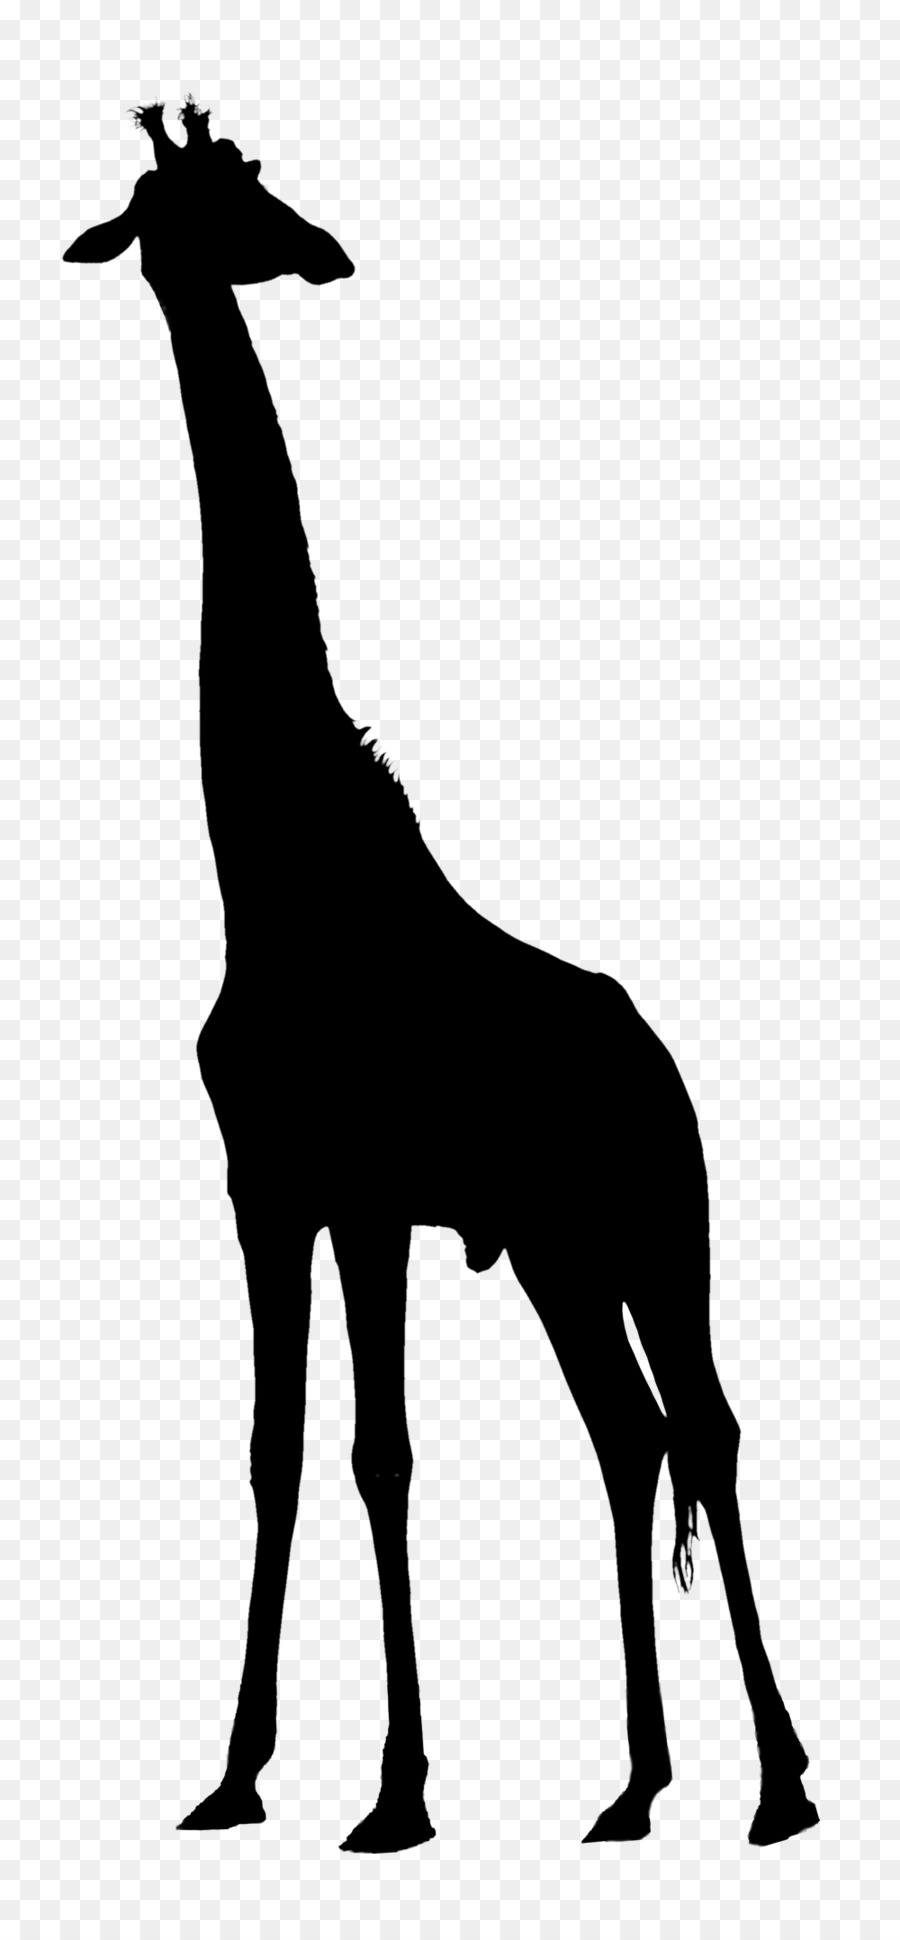 Giraffe Clip art Vector graphics Image Silhouette -  png download - 1000*2155 - Free Transparent Giraffe png Download.